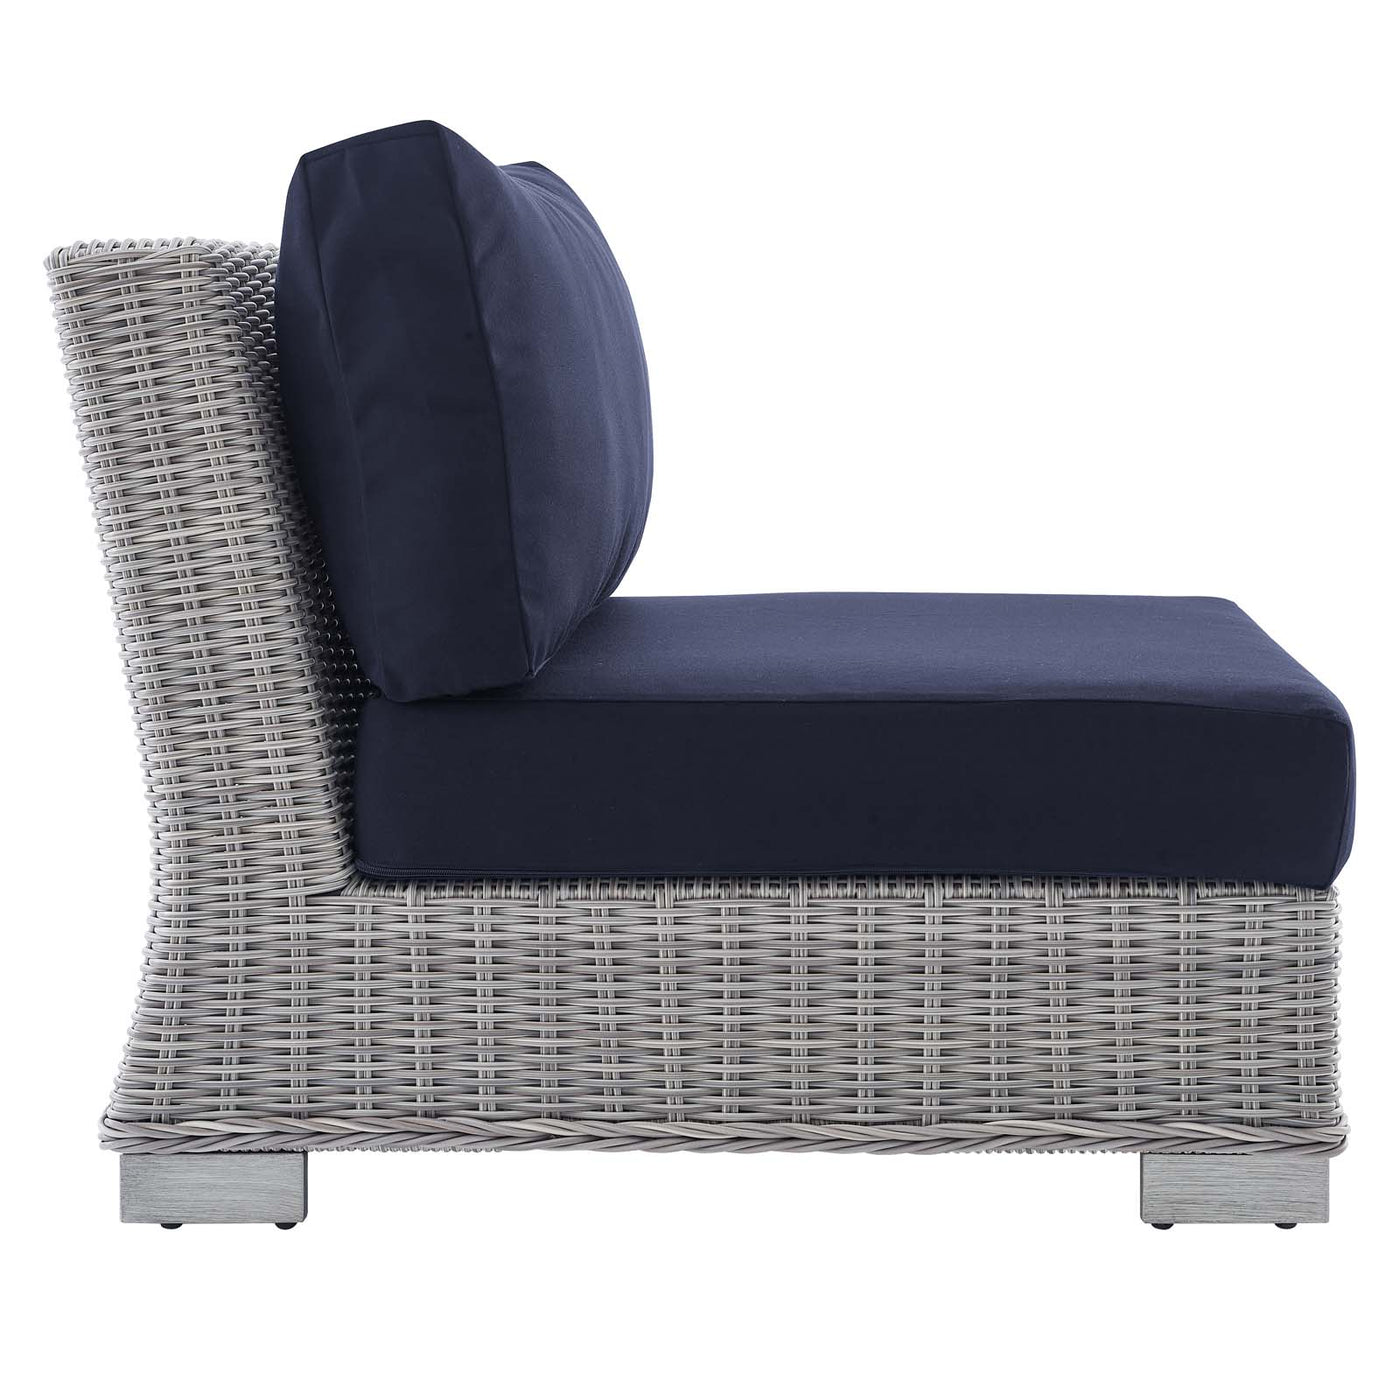 Conway Sunbrella® Outdoor Patio Wicker Rattan Armless Chair